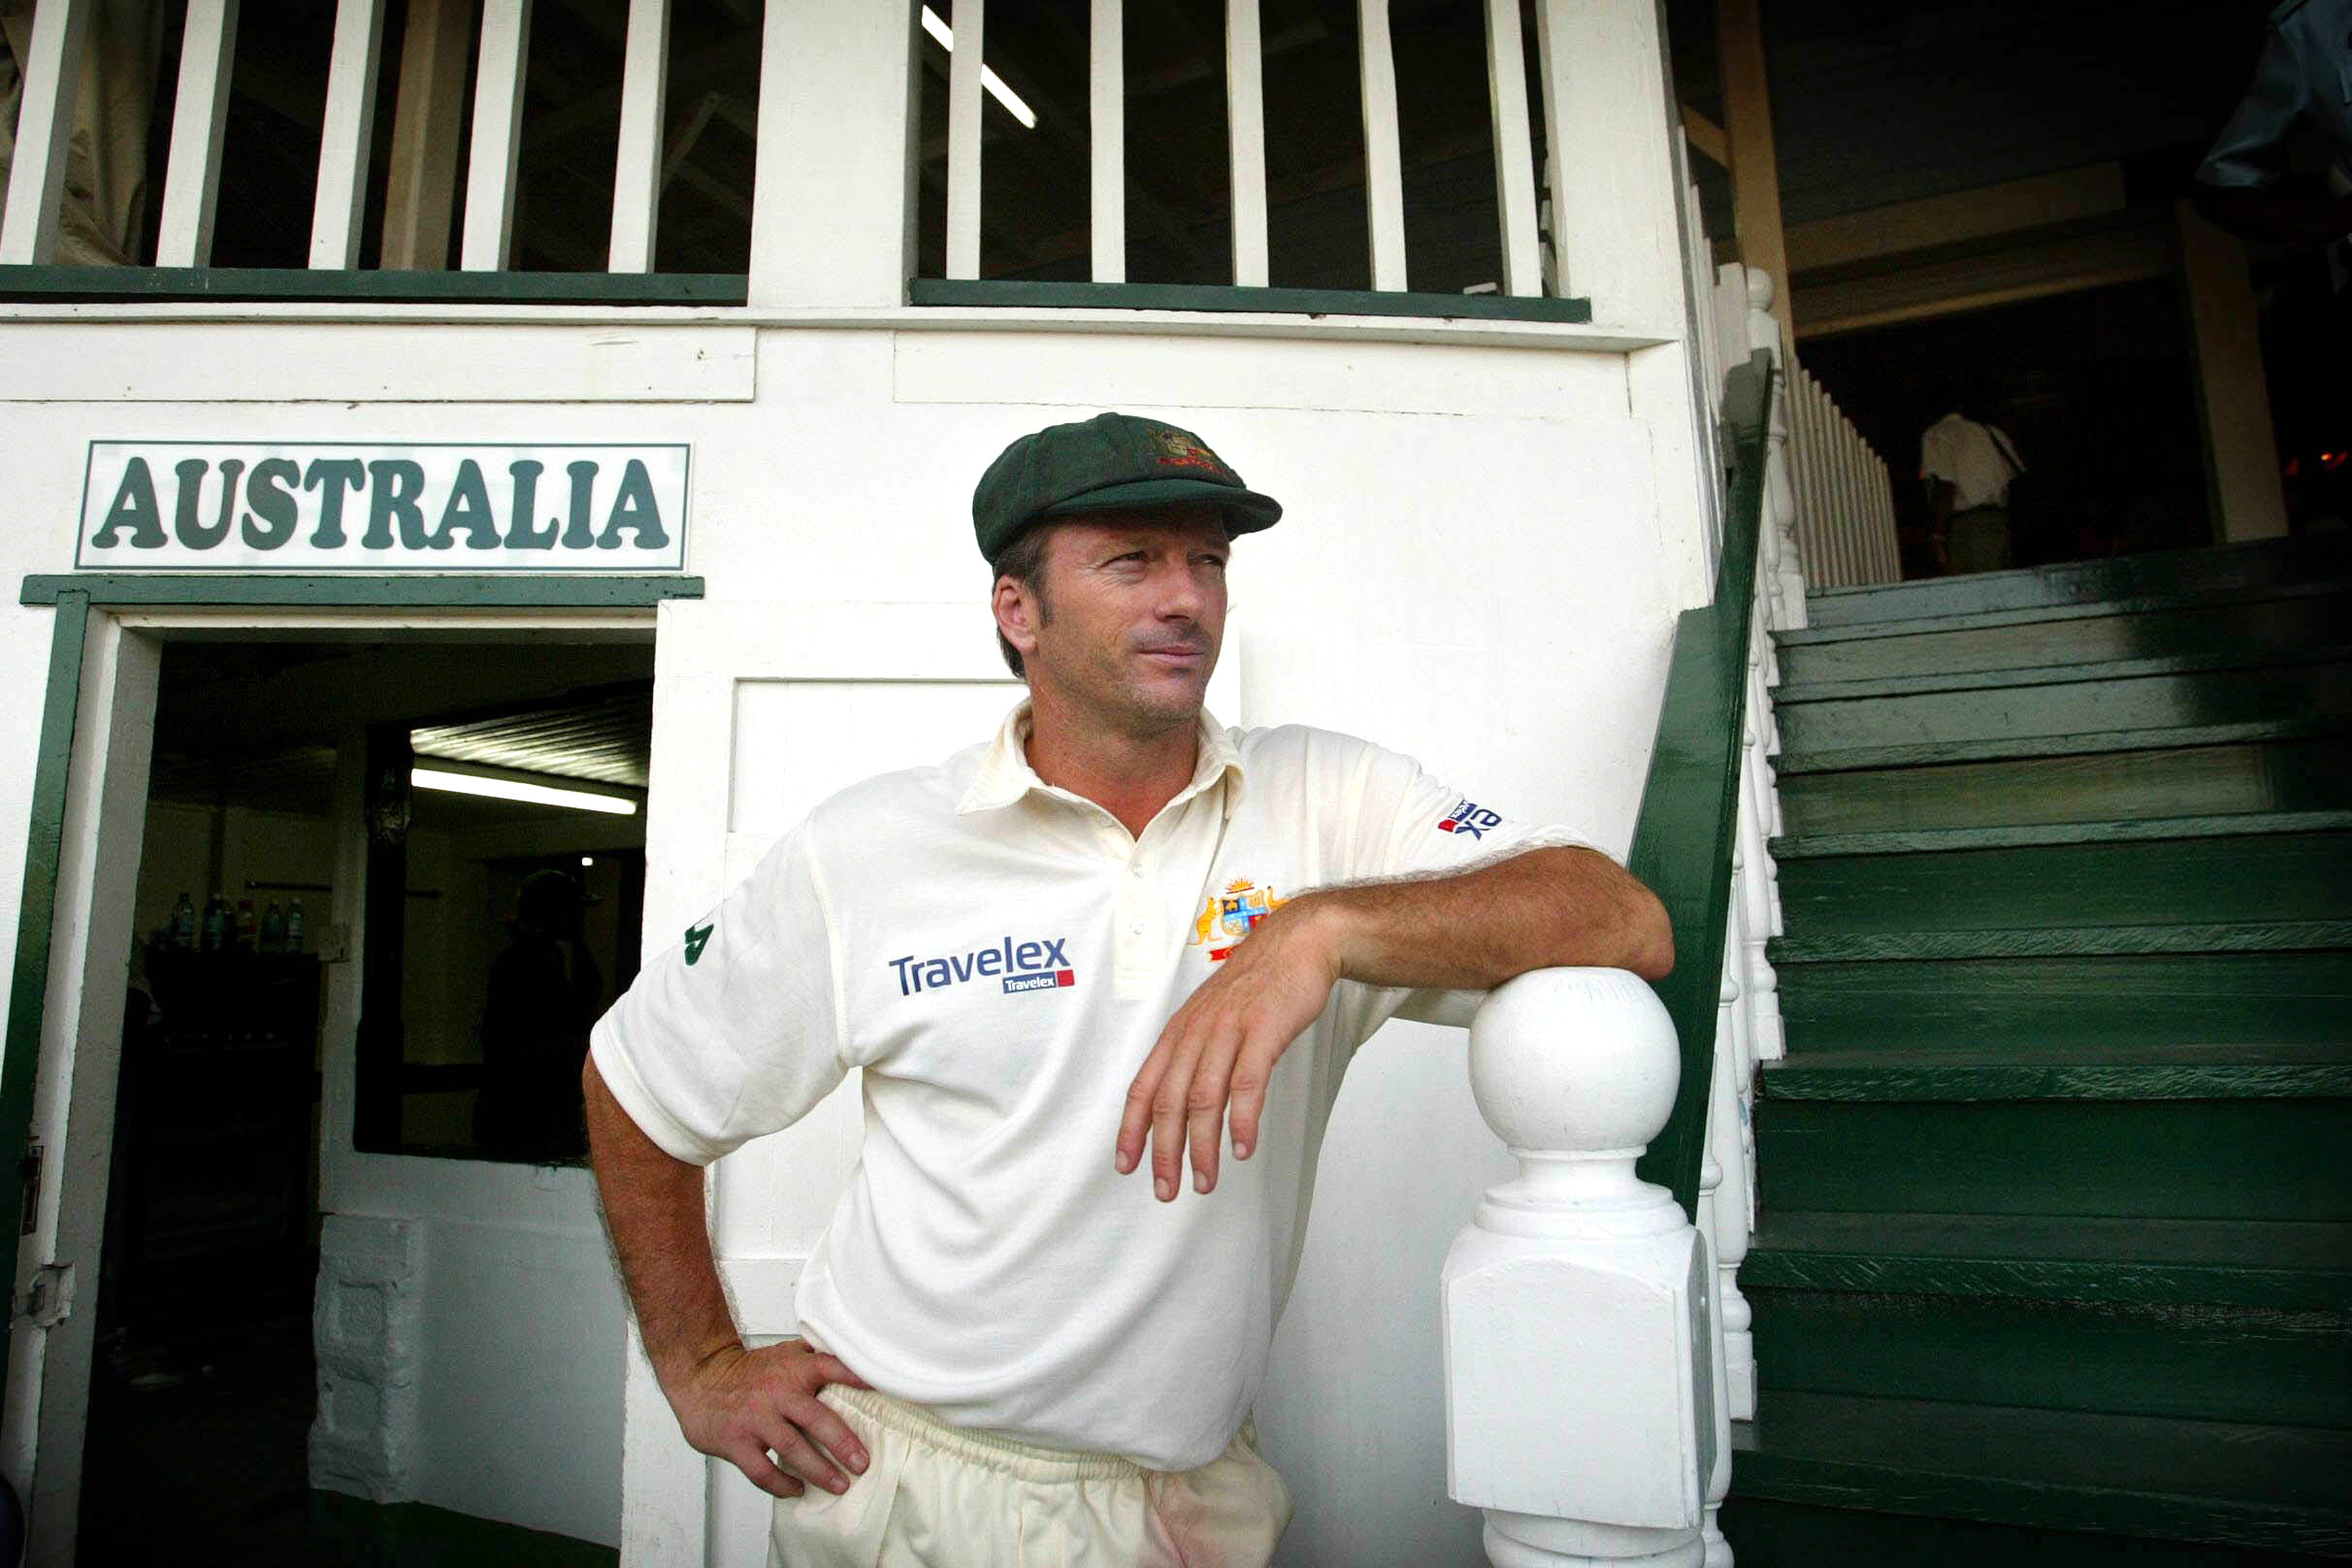   09/04/2003 PIRATE: Cricketer Steve Waugh at Bourda Oval, Guyana 08 Apr 2003.  